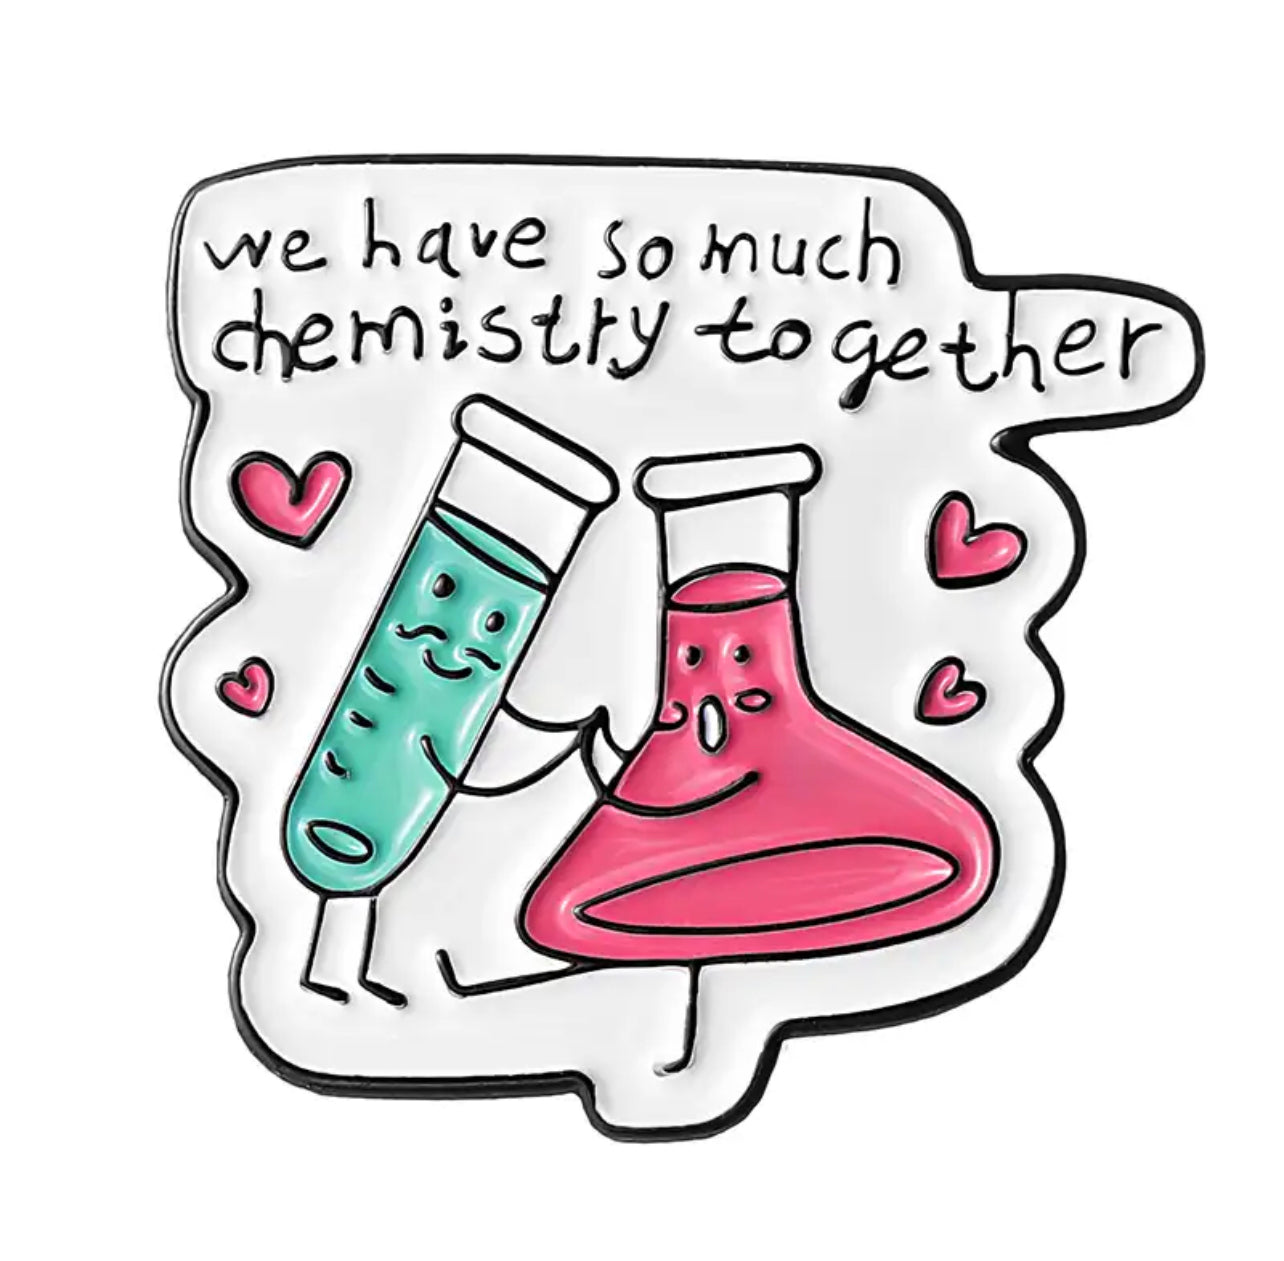 Chemistry together